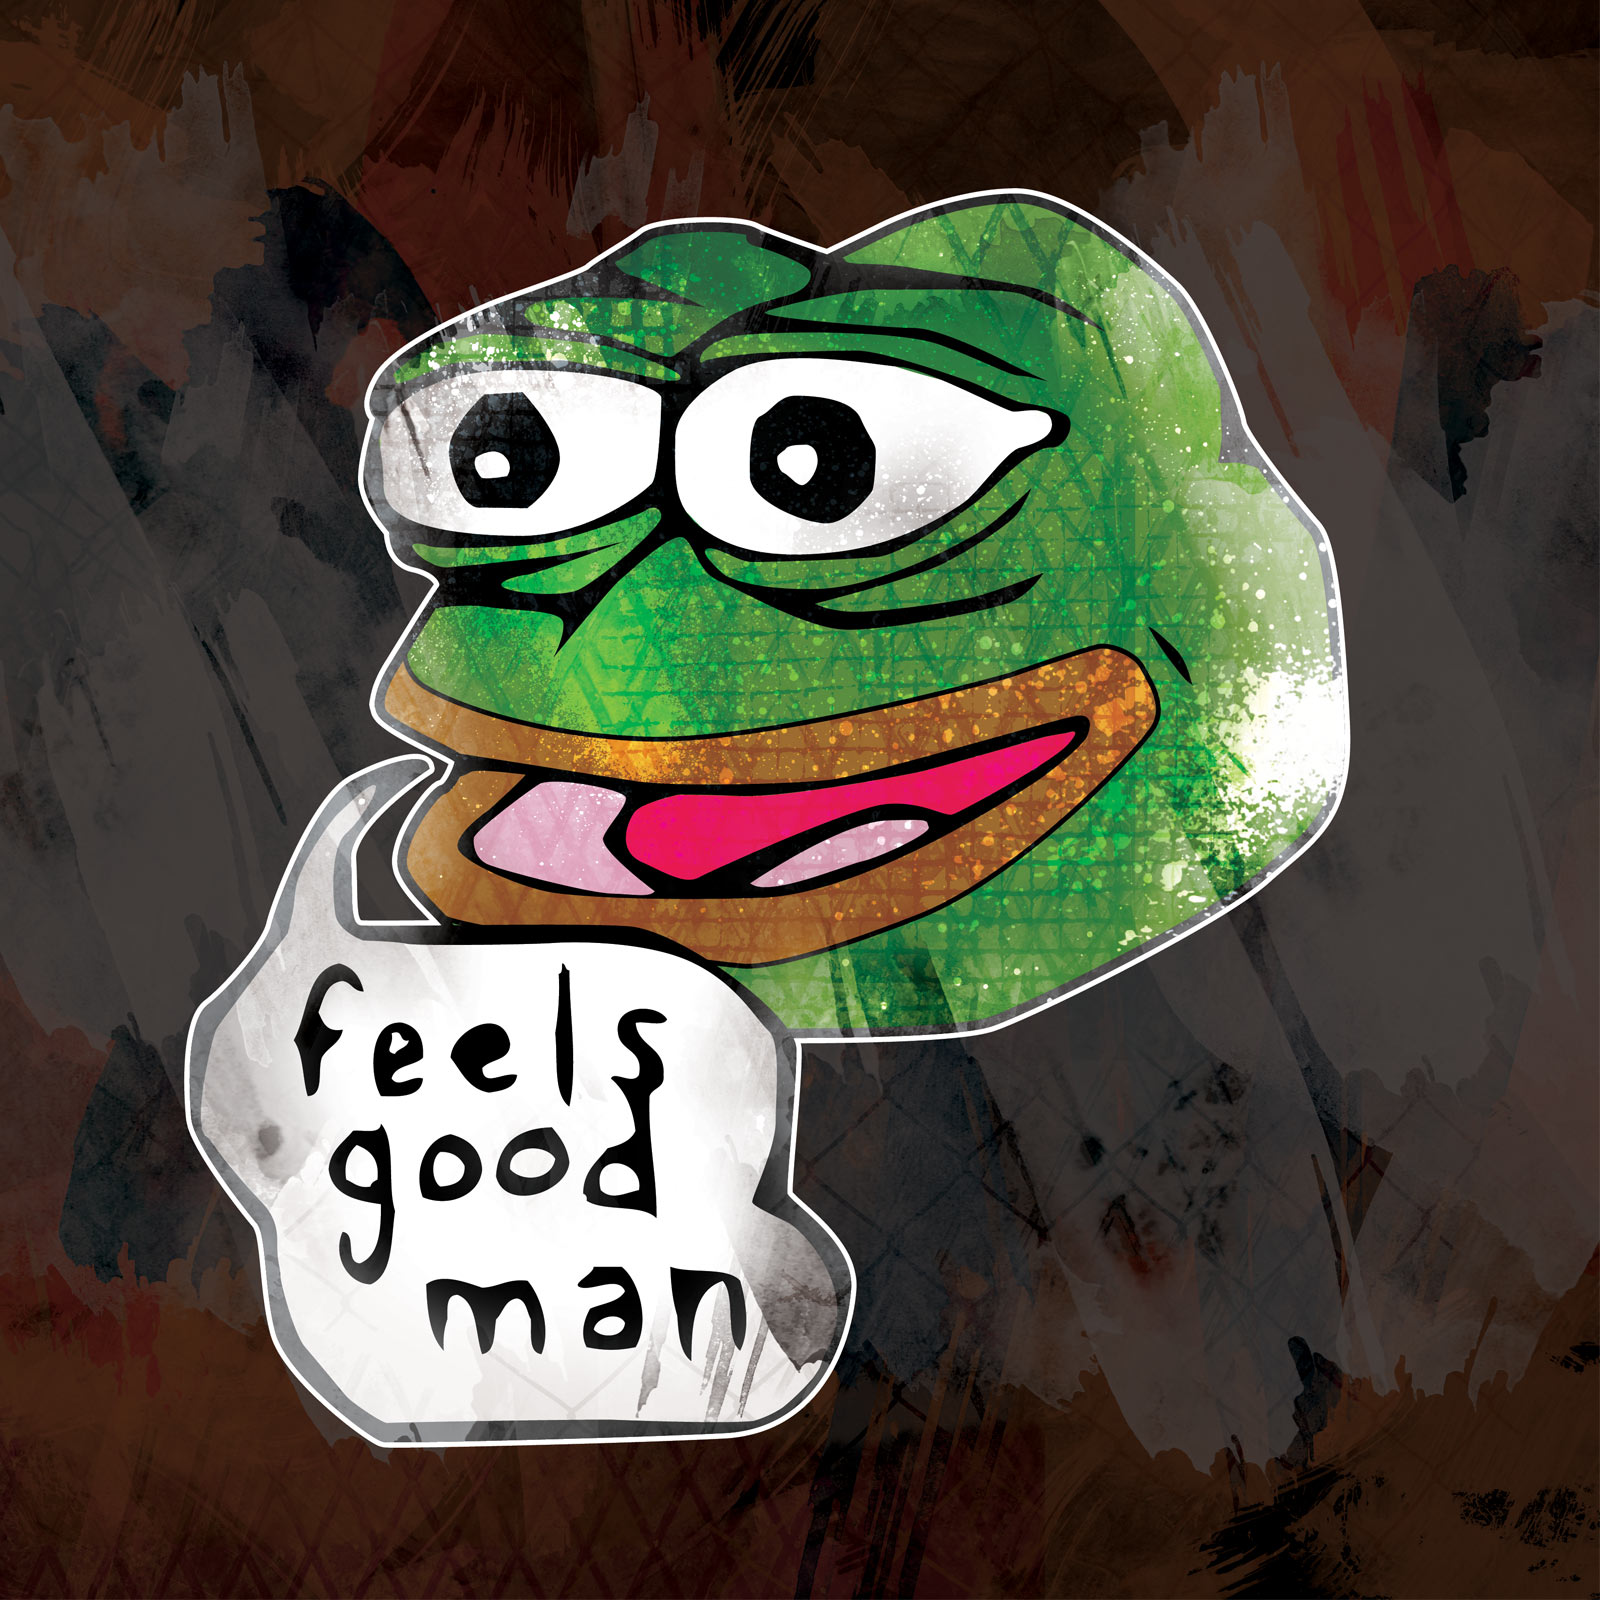 Feeling good man. Feels good man. Feels good man Мем. Pepe feels good man.